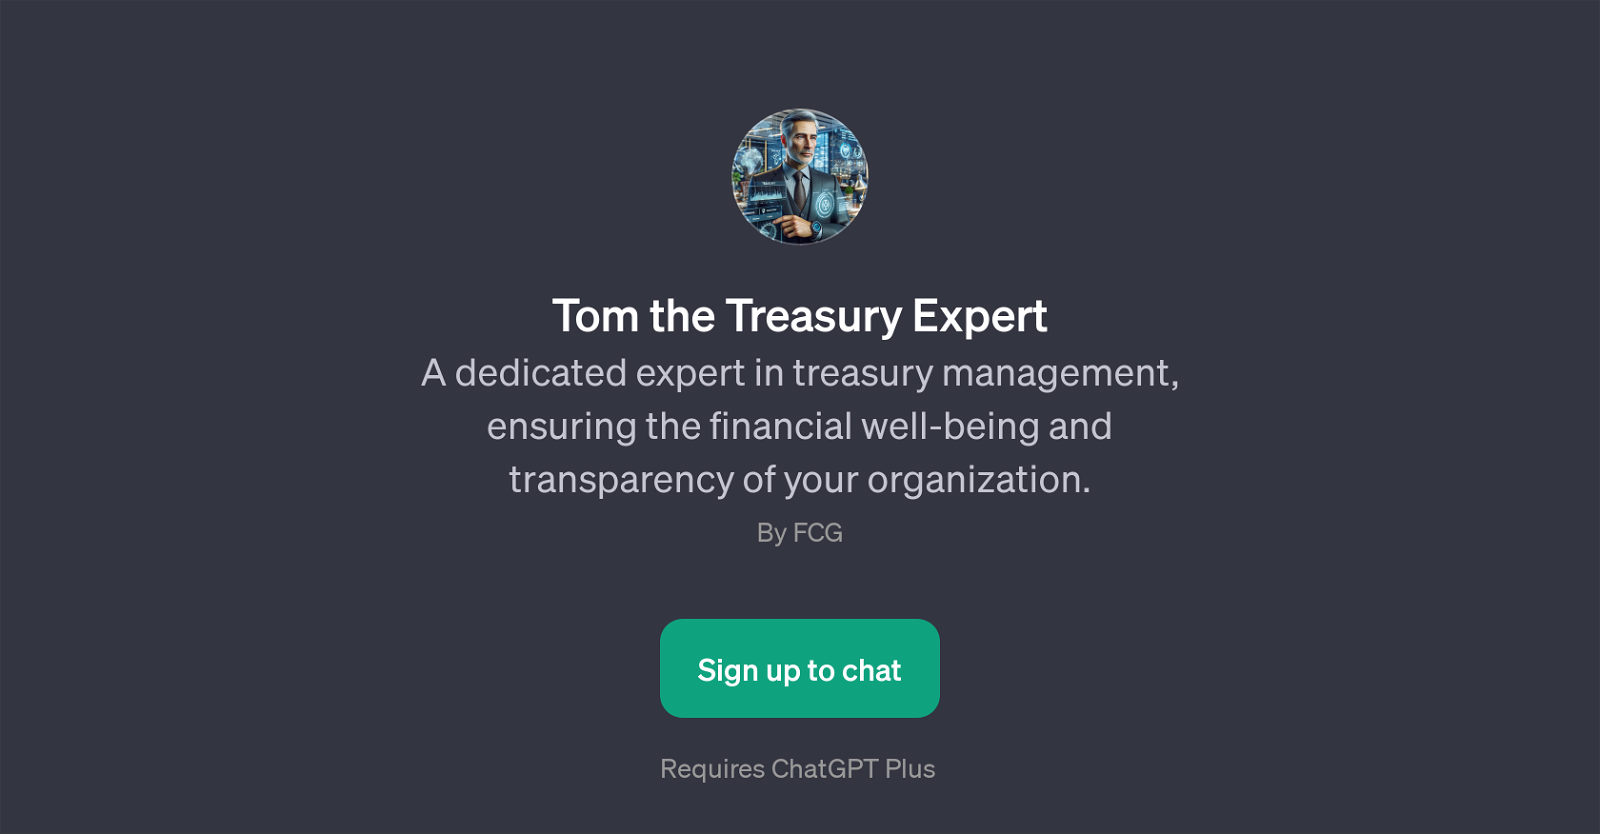 Tom the Treasury Expert website